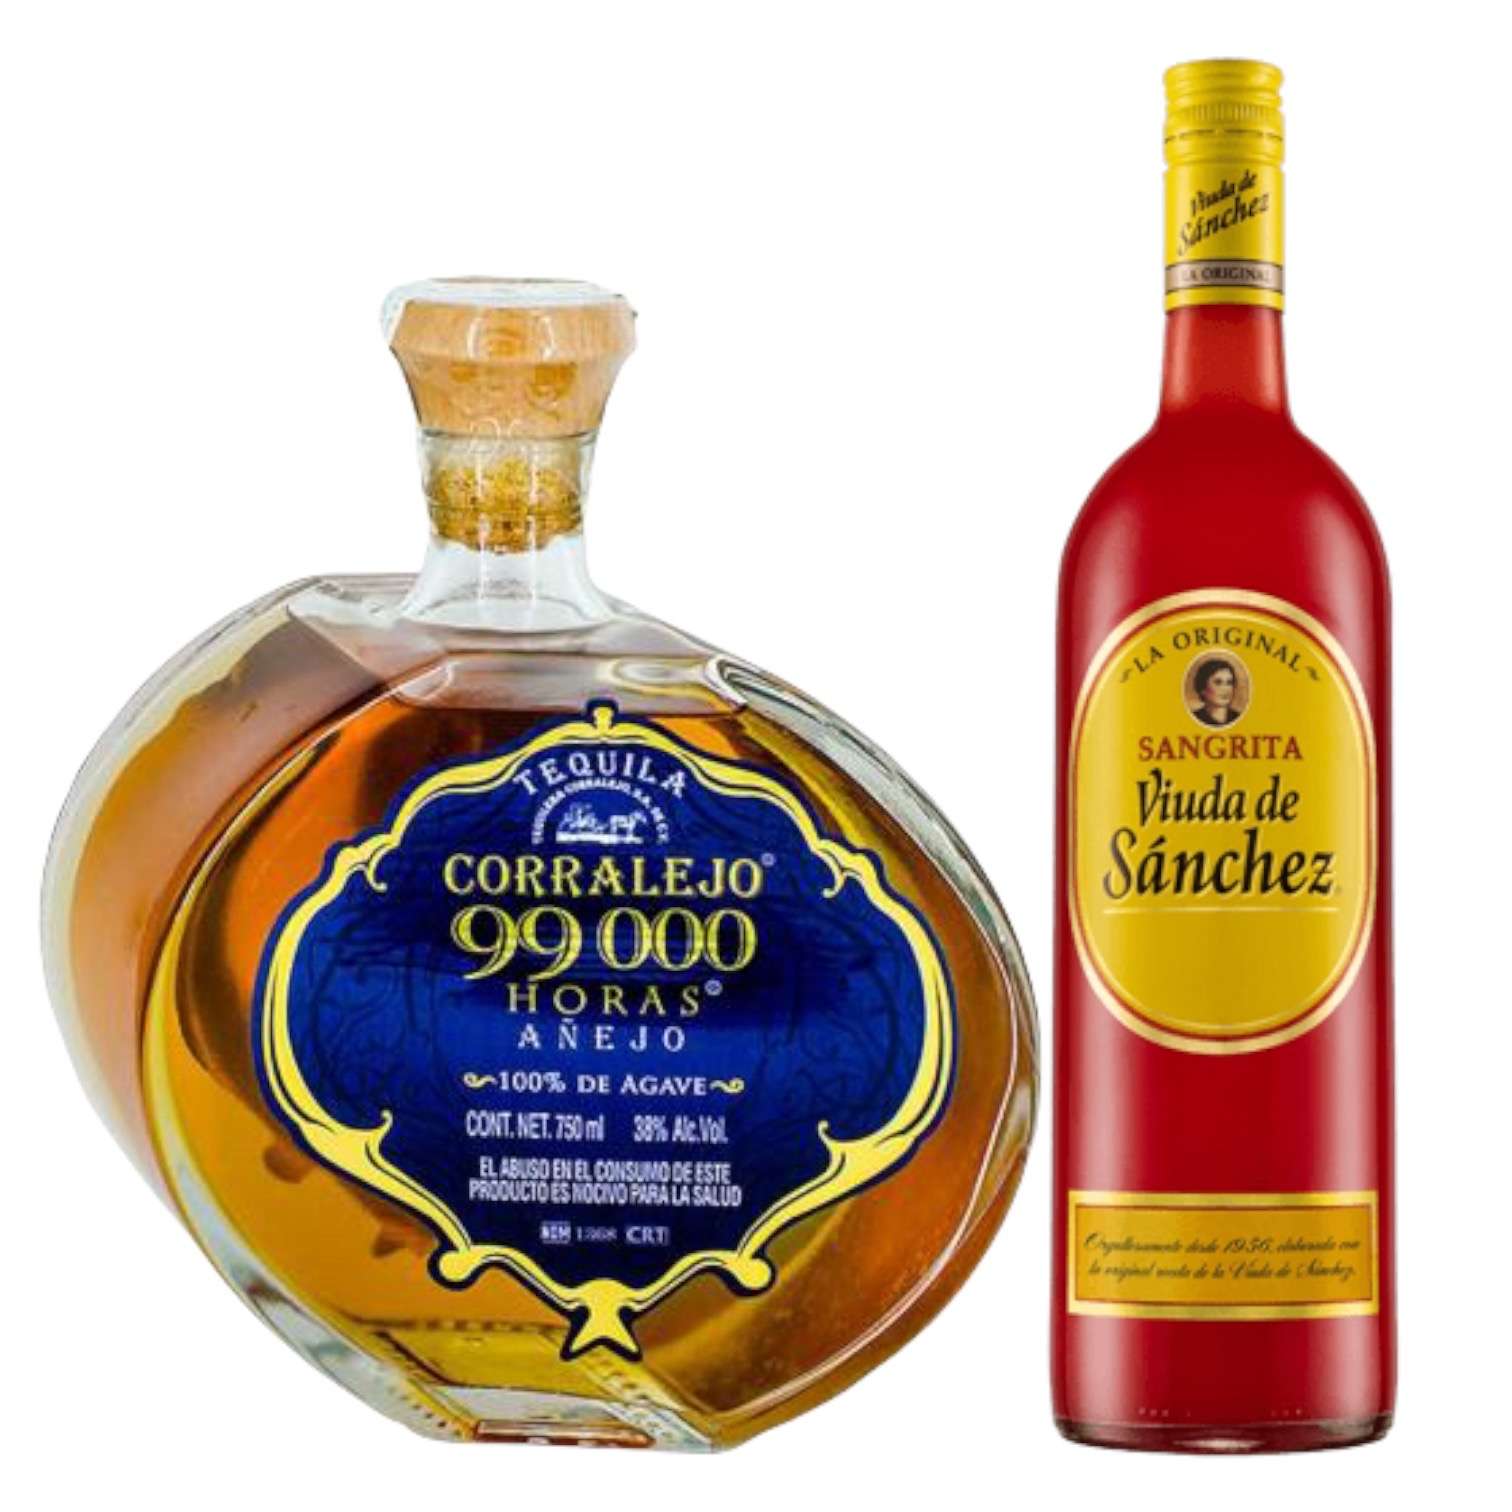 Tequila Corralejo 99,000 Horas Añejo GuateSelectos - - Litro ml+ Sangrita Guatemala 750